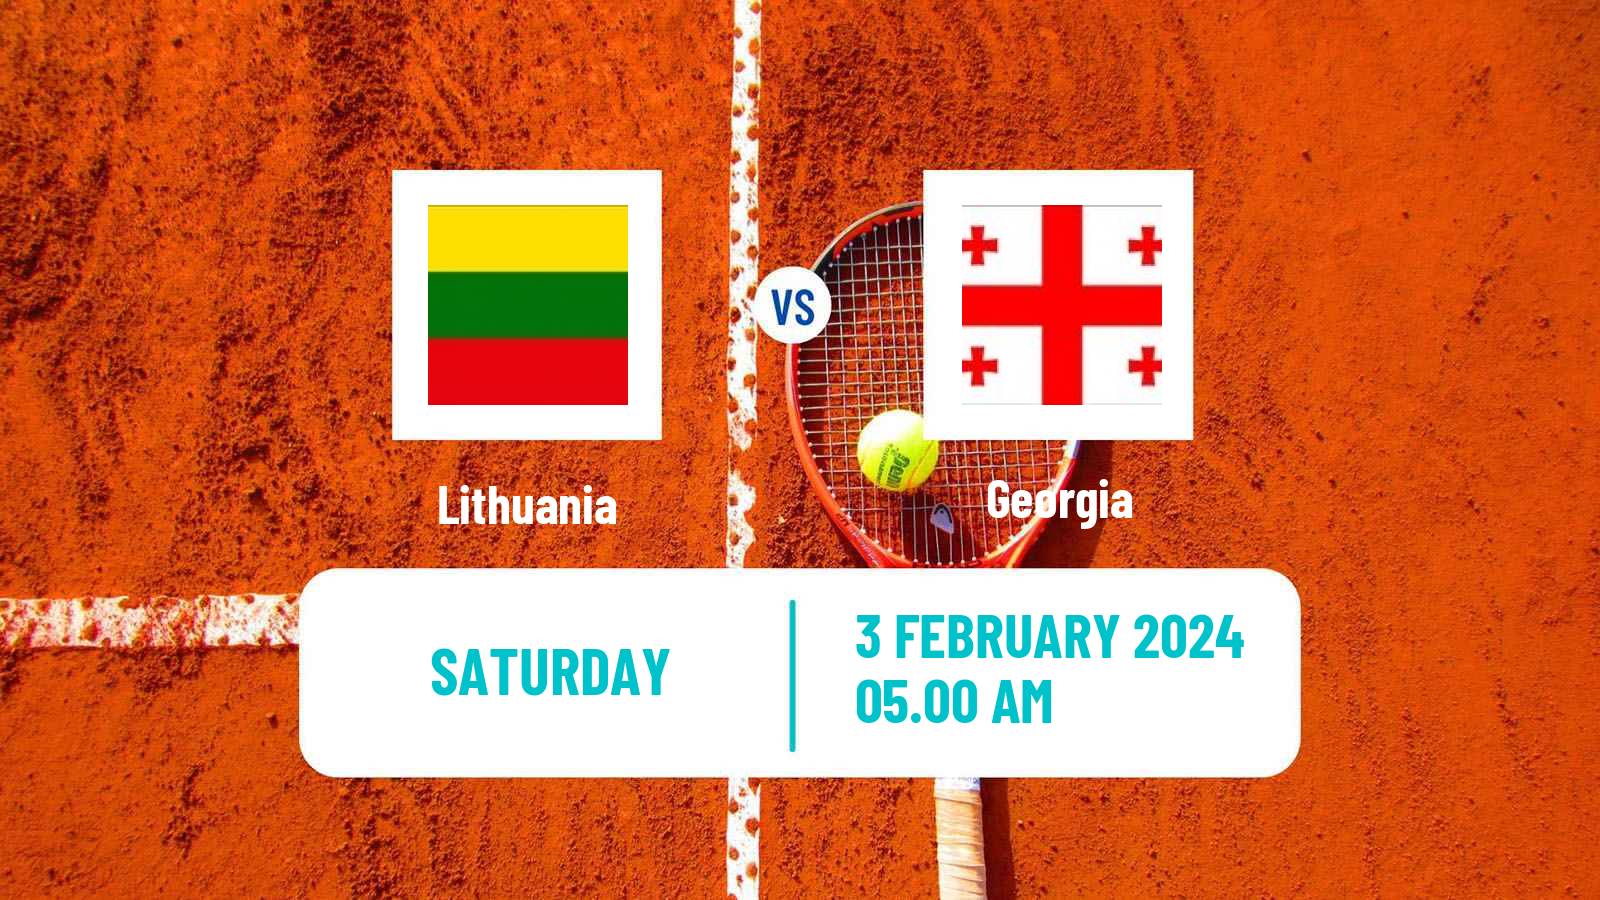 Tennis Davis Cup World Group I Teams Lithuania - Georgia